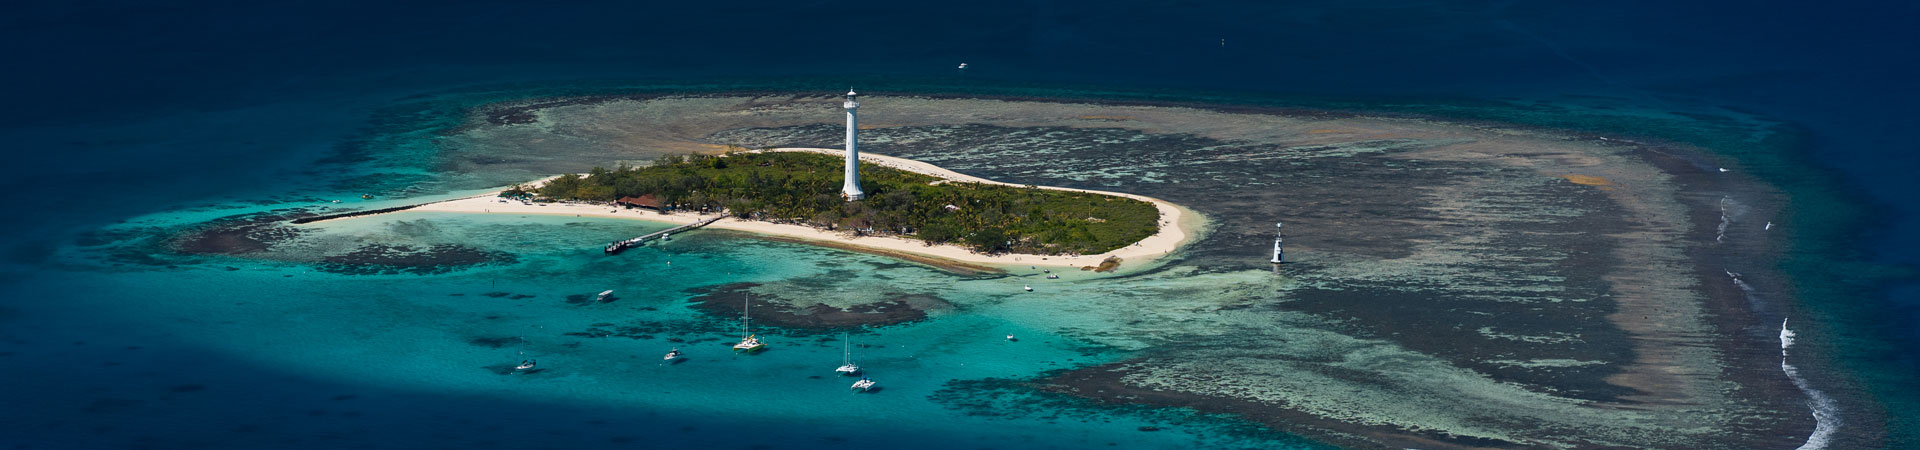 Amédée lighthouse island in Nouméa